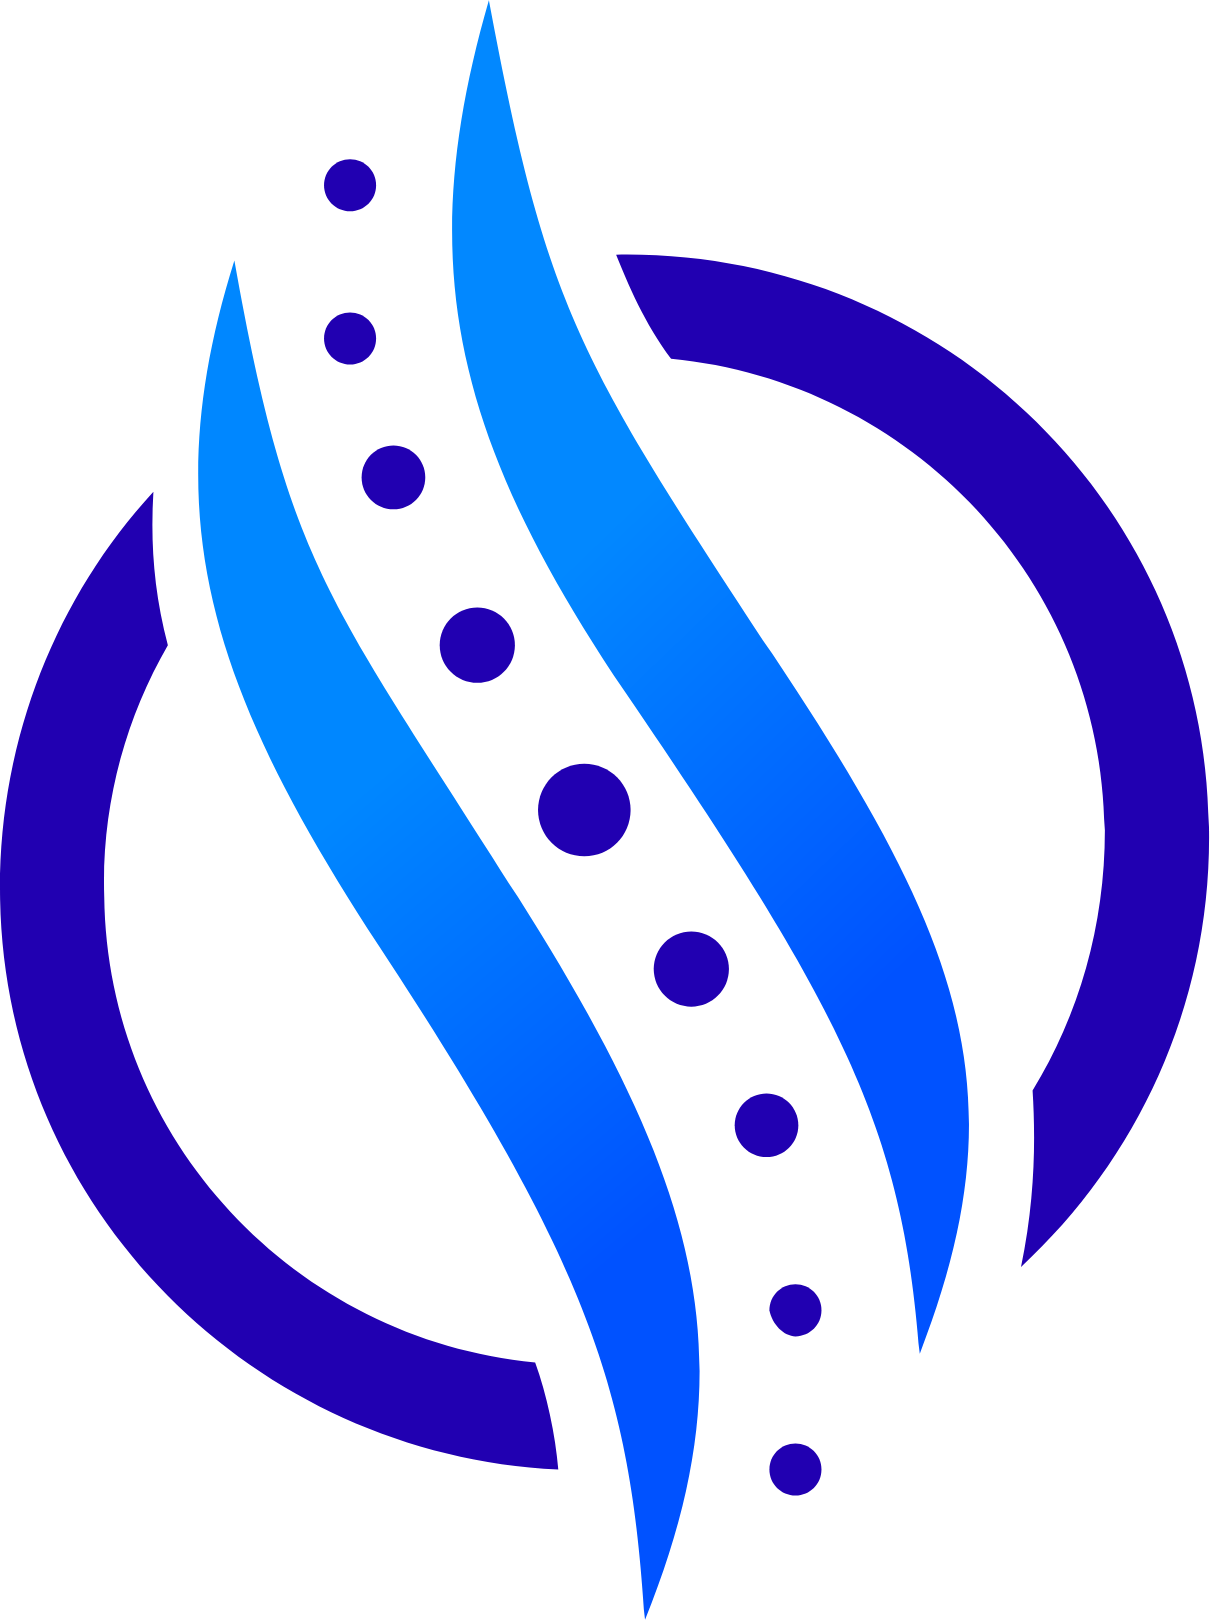 Telix Pharmaceuticals logo (transparent PNG)